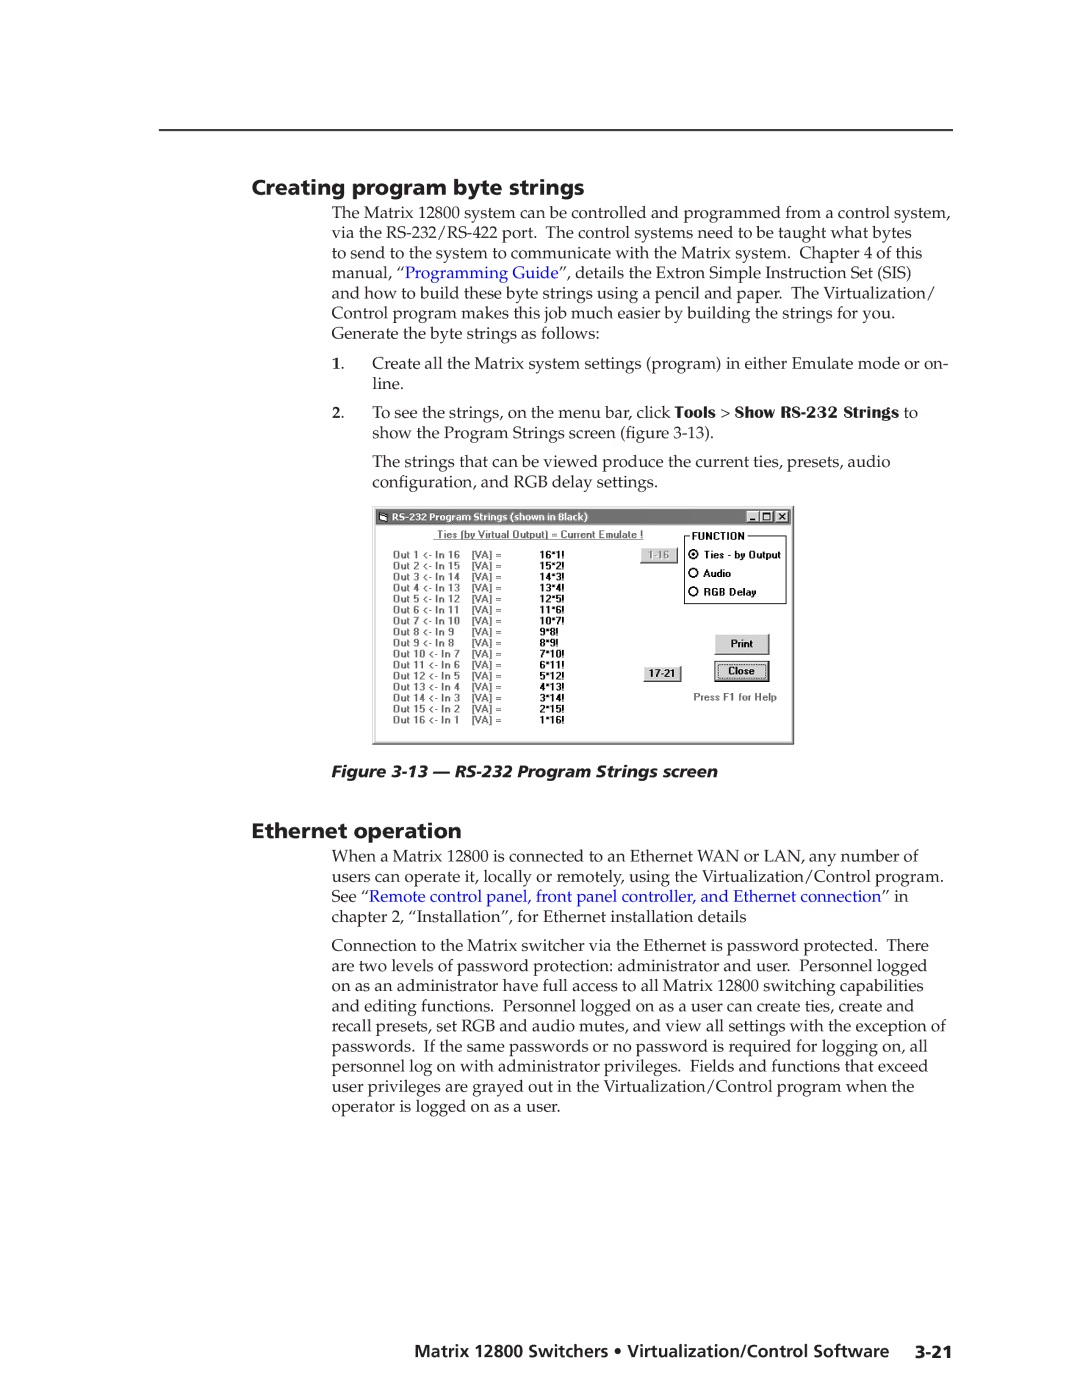 Extron electronic 12800 manual Creating program byte strings, Ethernet operation 